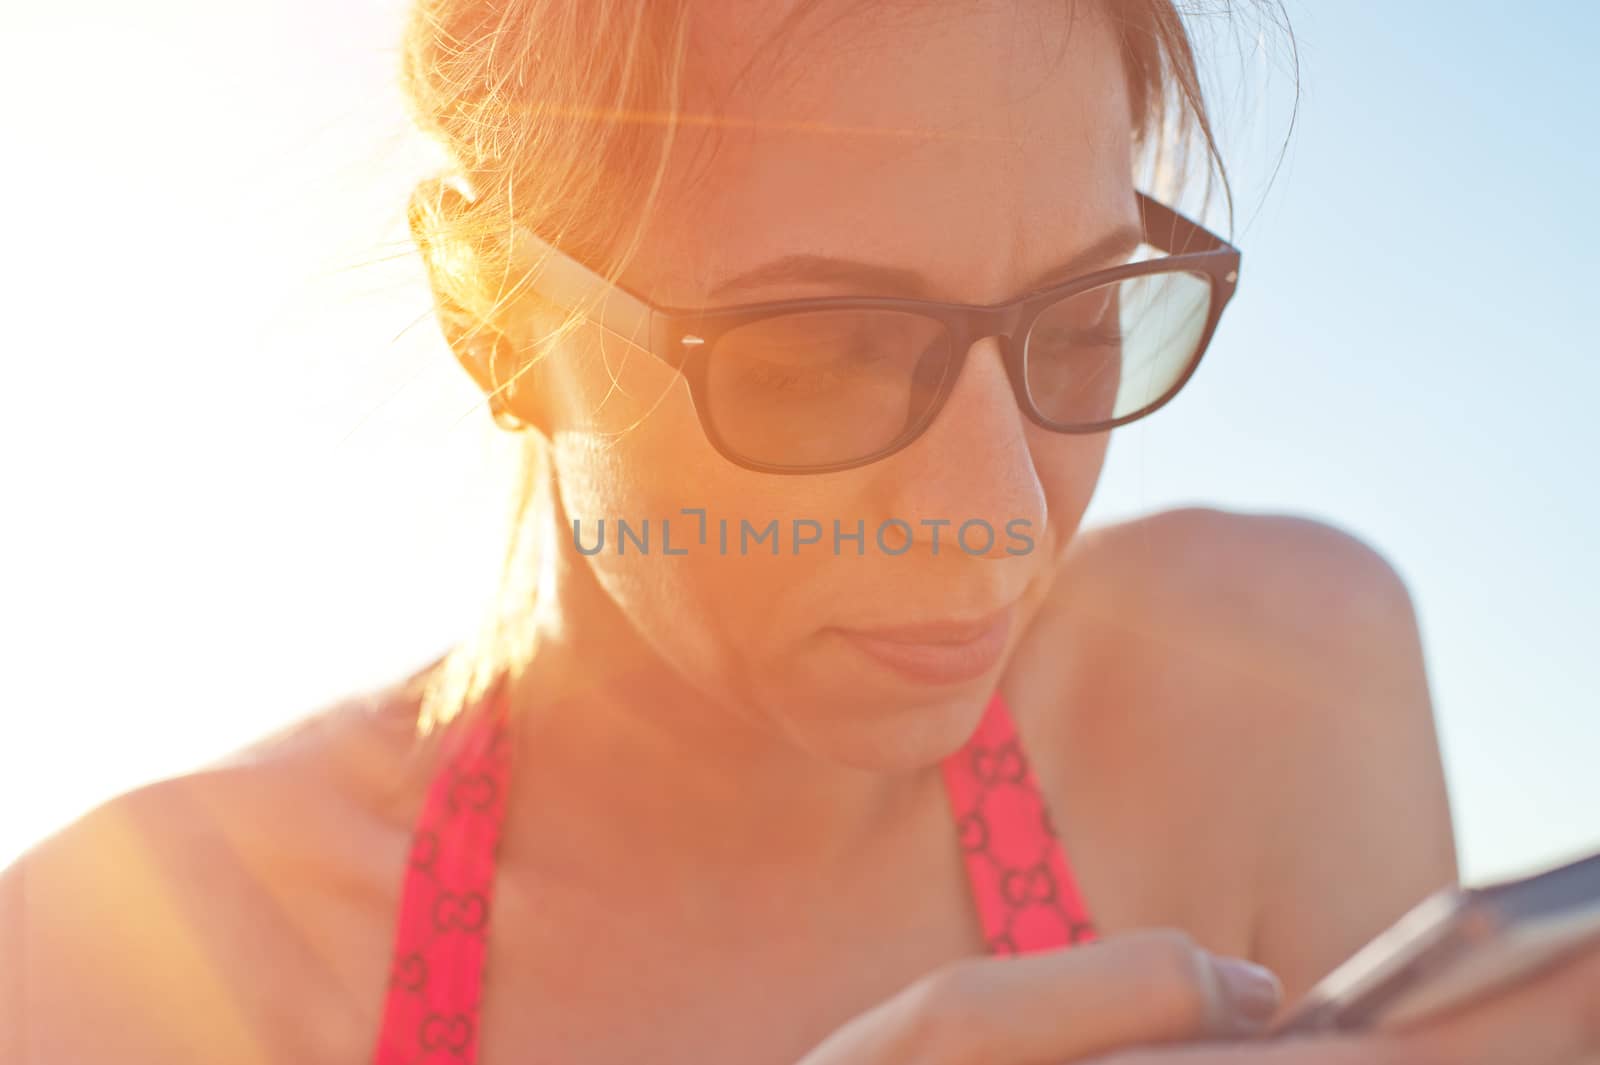 Woman at beach, close up still life portrait